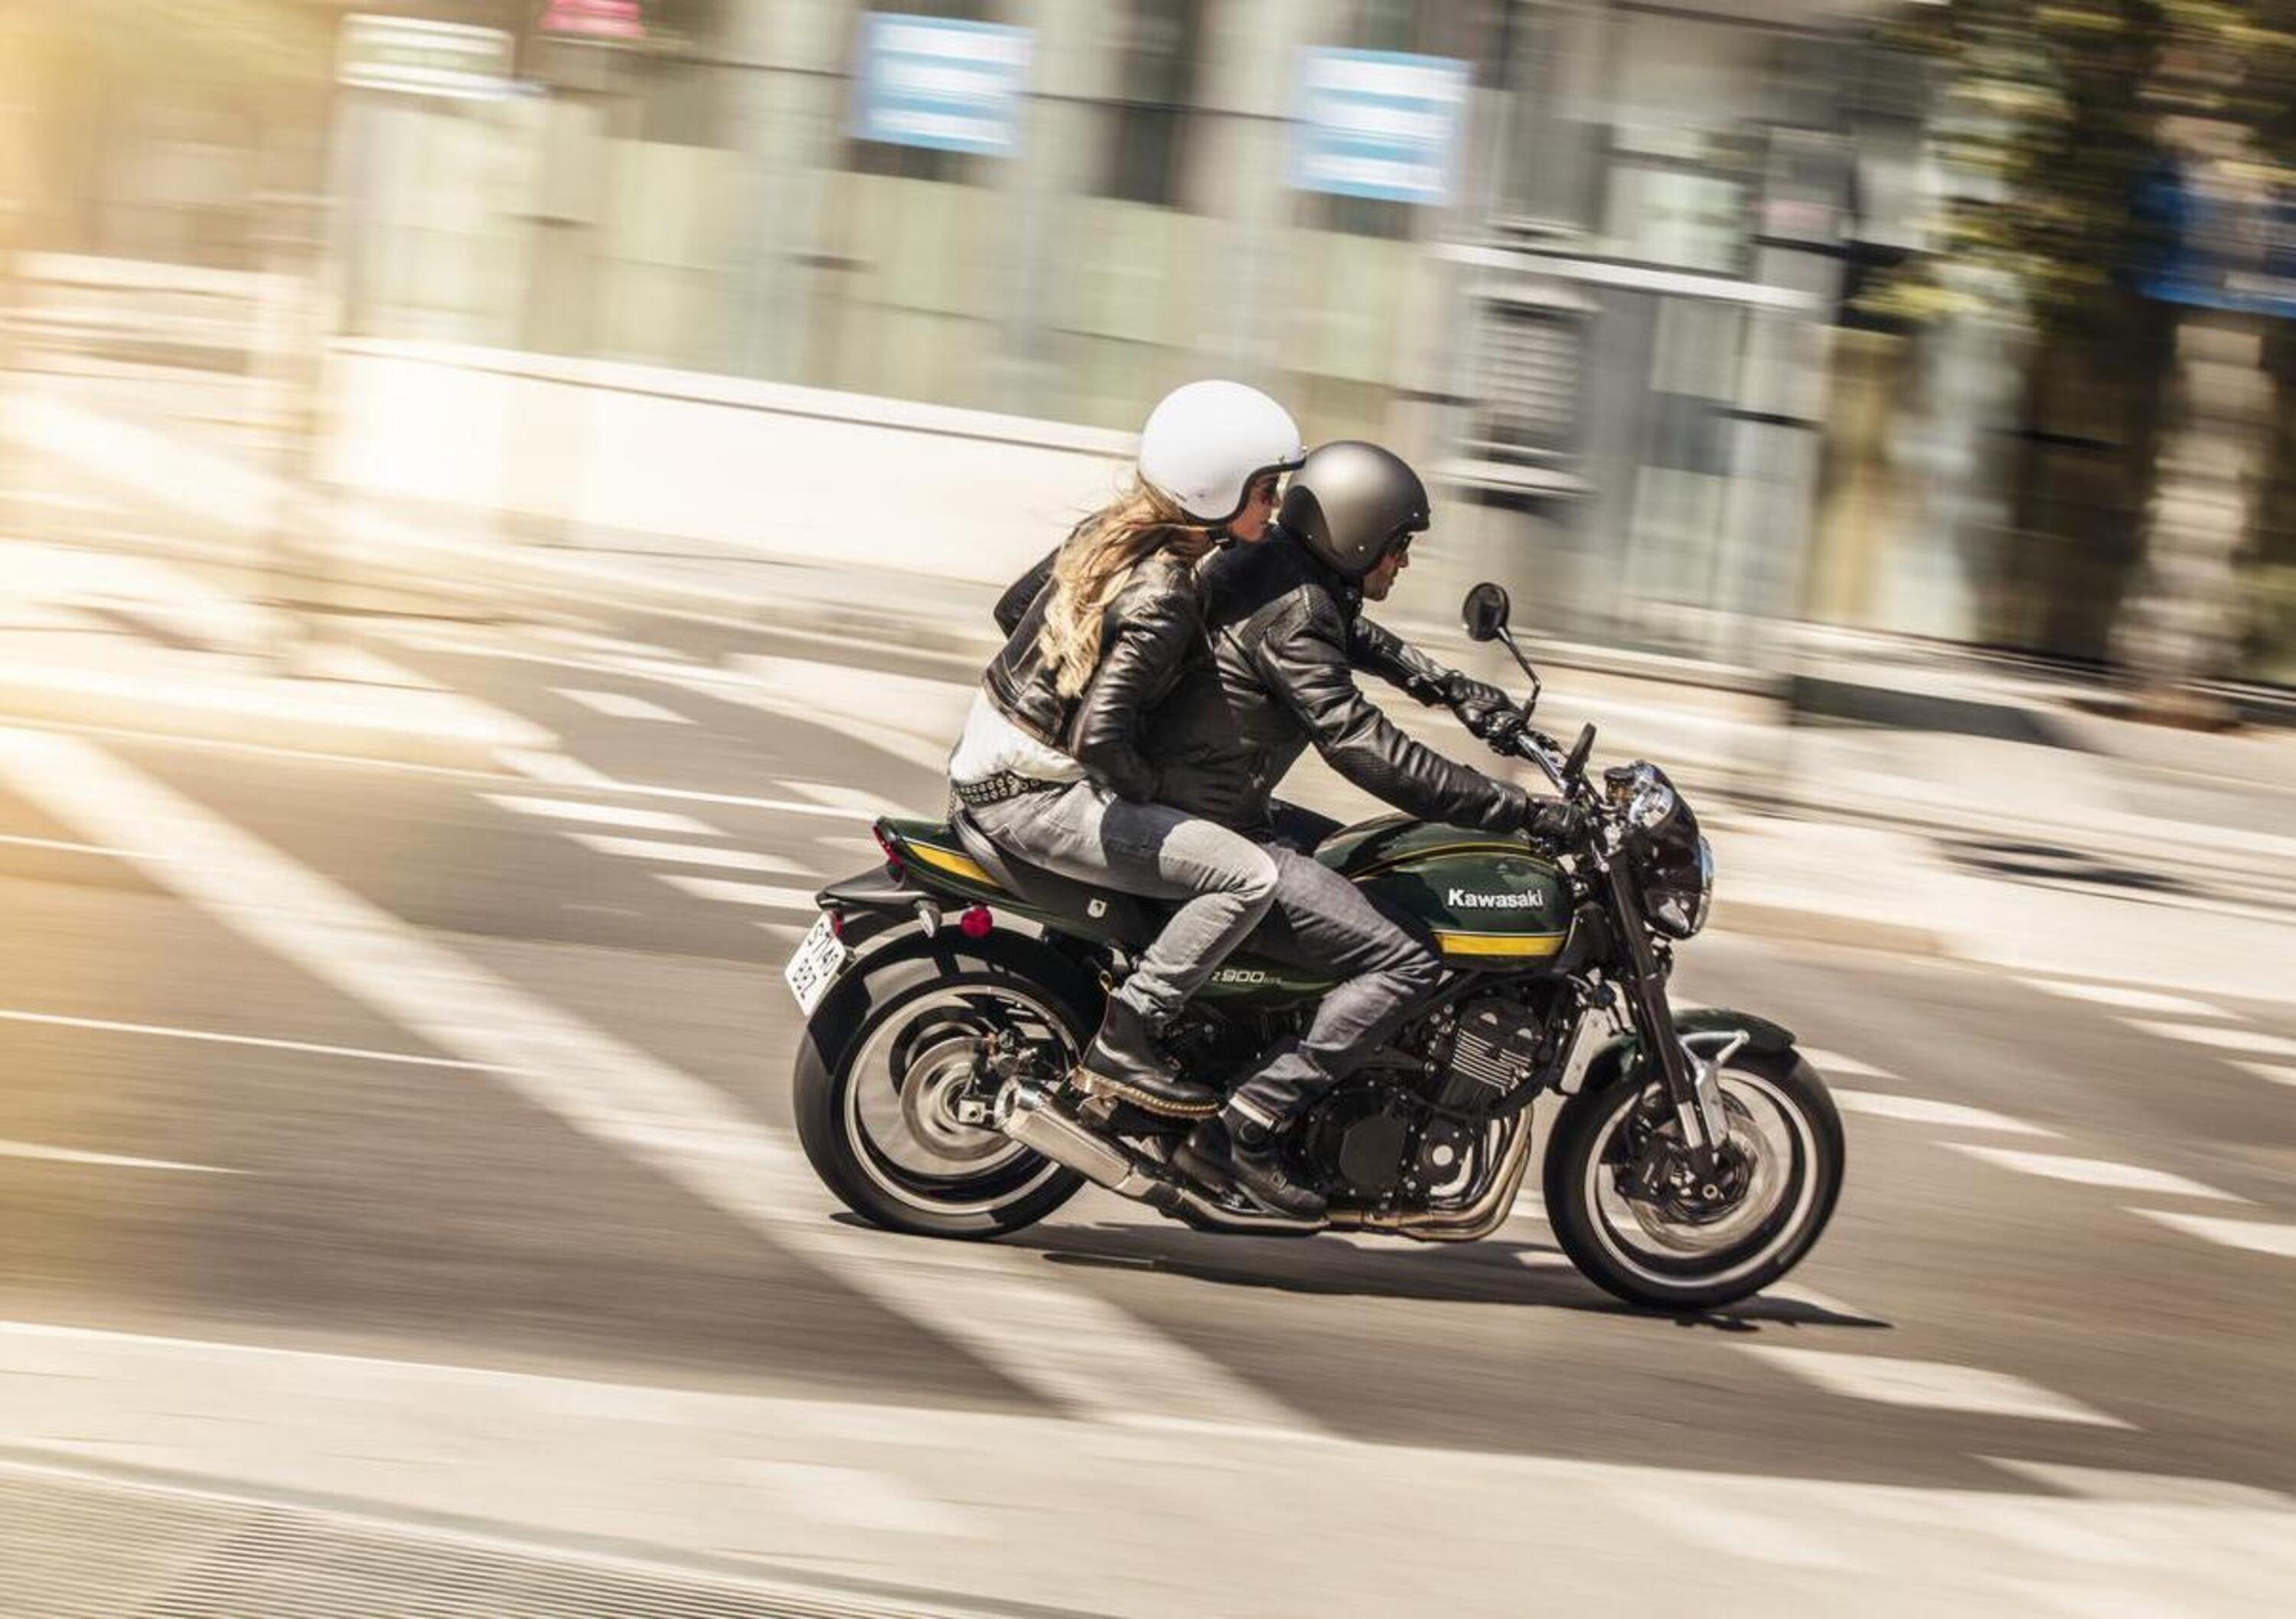 Kawasaki Demo Ride Tour 2020. Il via questo weekend News Moto.it